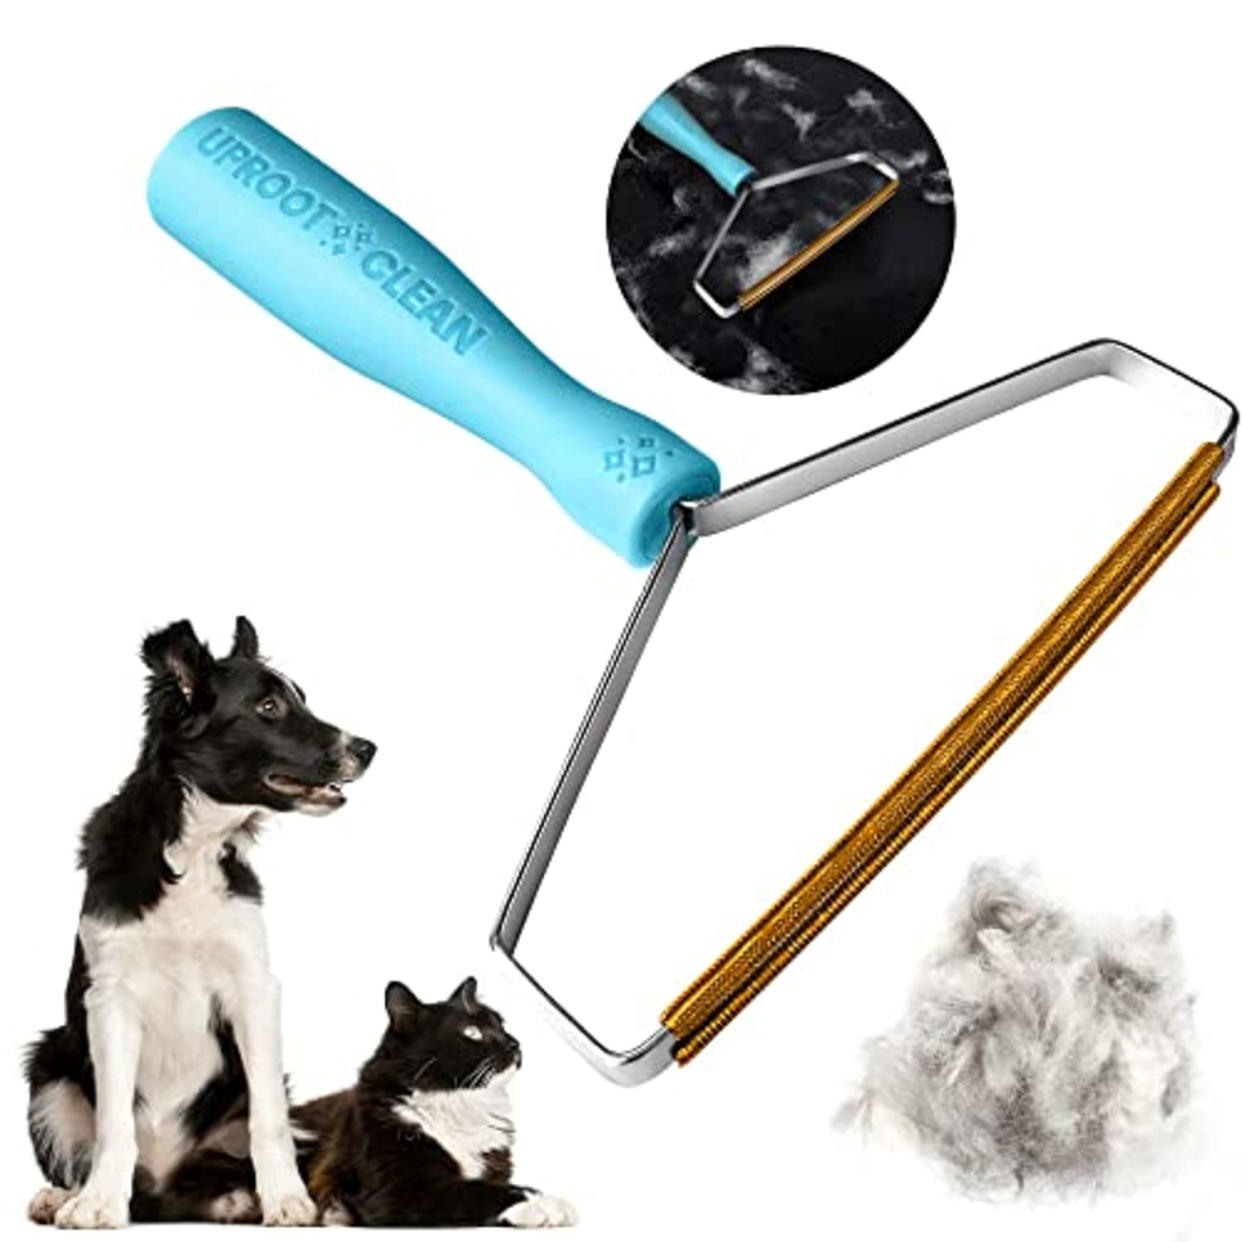 Uproot Cleaner Pro Pet Hair Remover (Amazon / Amazon)